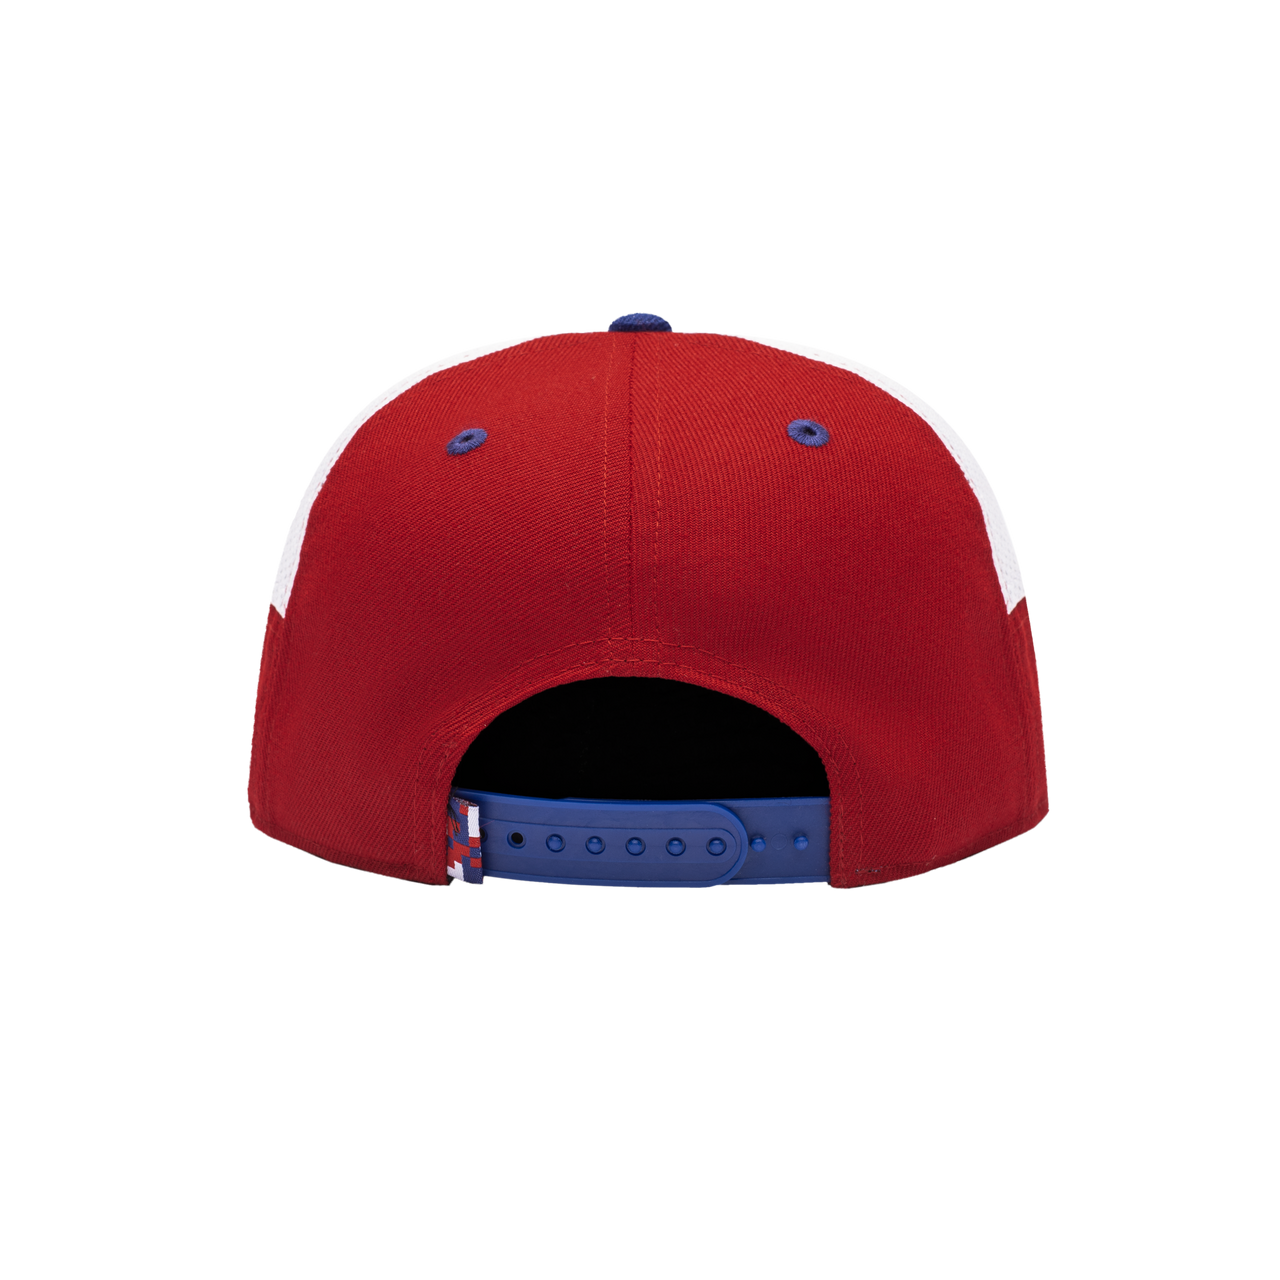 Cruz Azul 'Mondrian' Adjustable Snapback Hat - Navy Blue